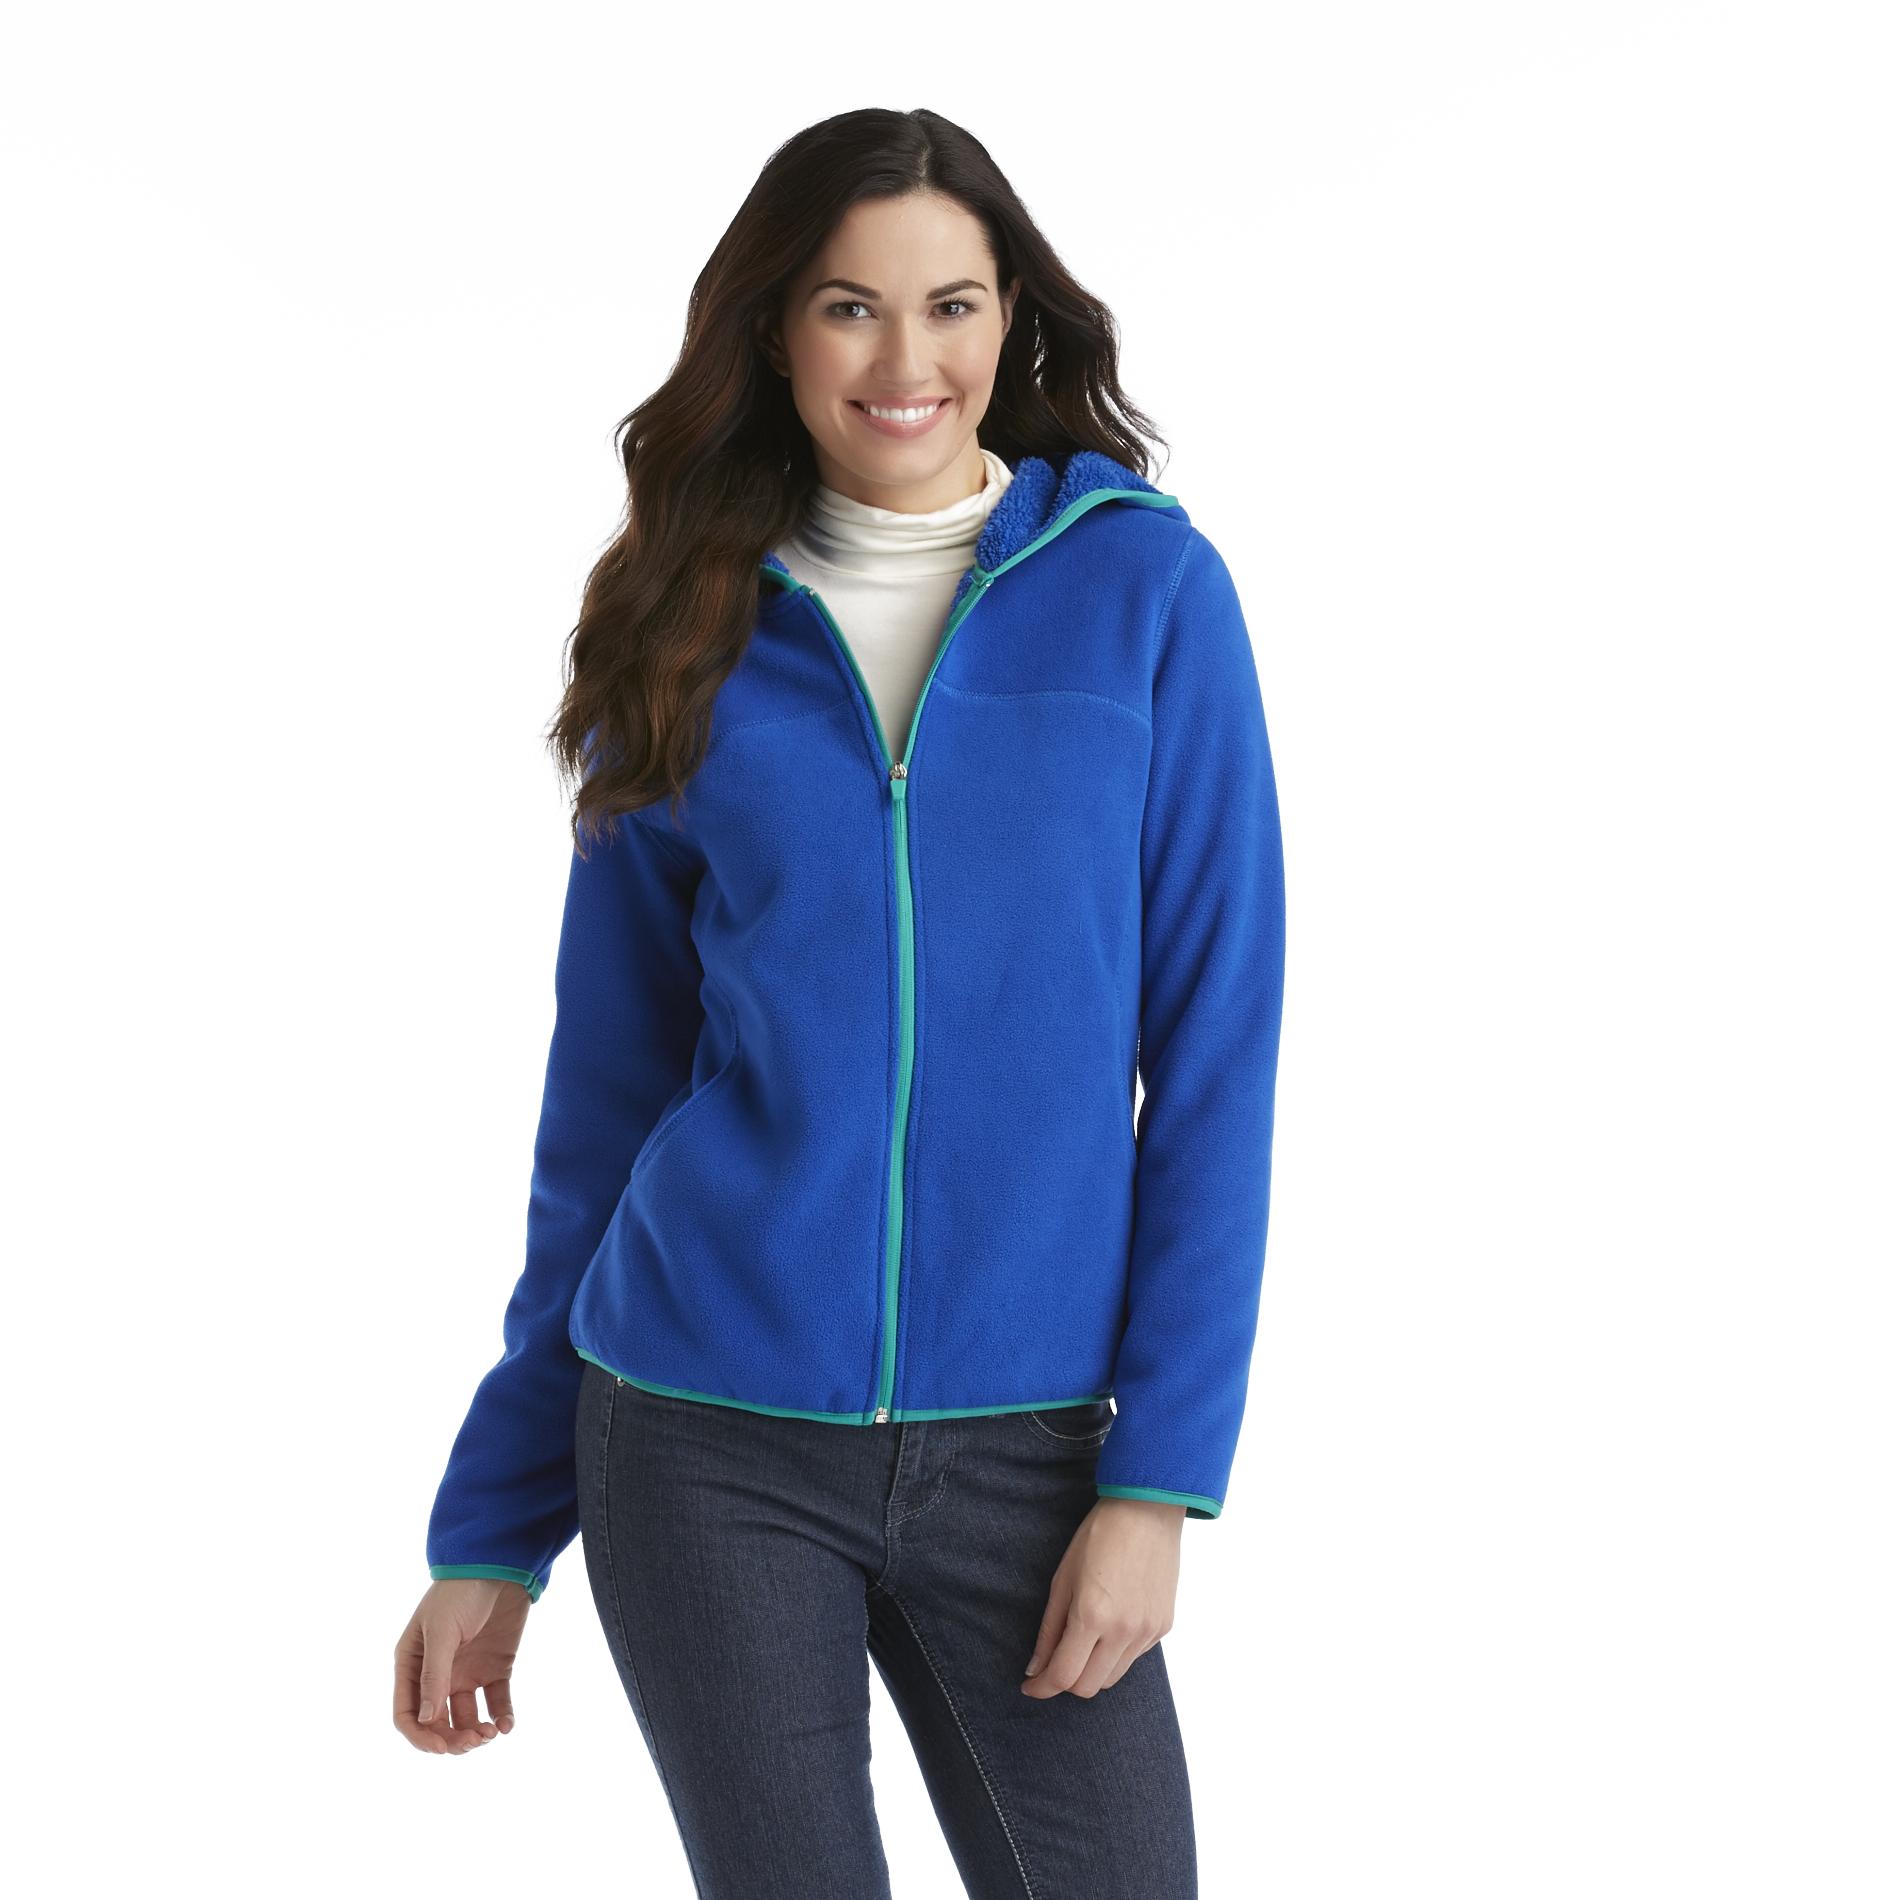 Athletech Women's Hooded Fleece Jacket